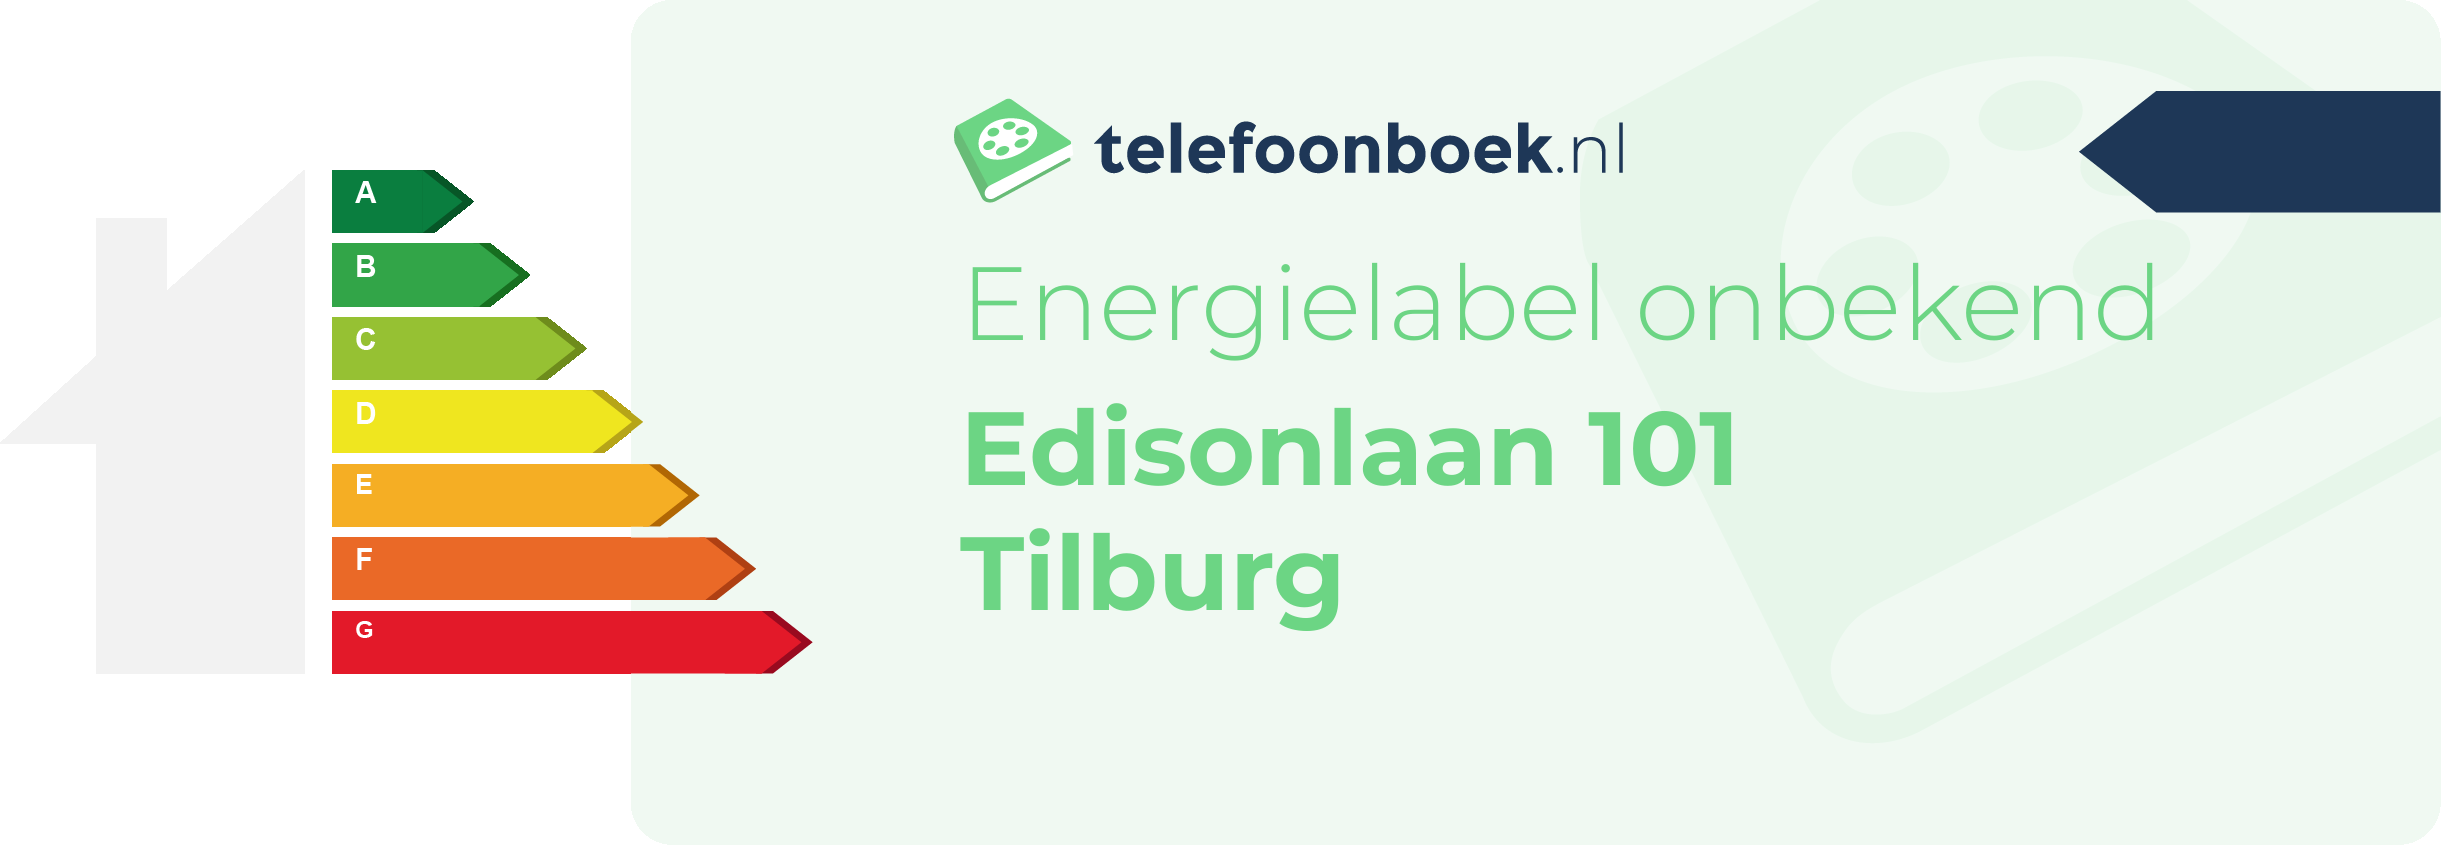 Energielabel Edisonlaan 101 Tilburg